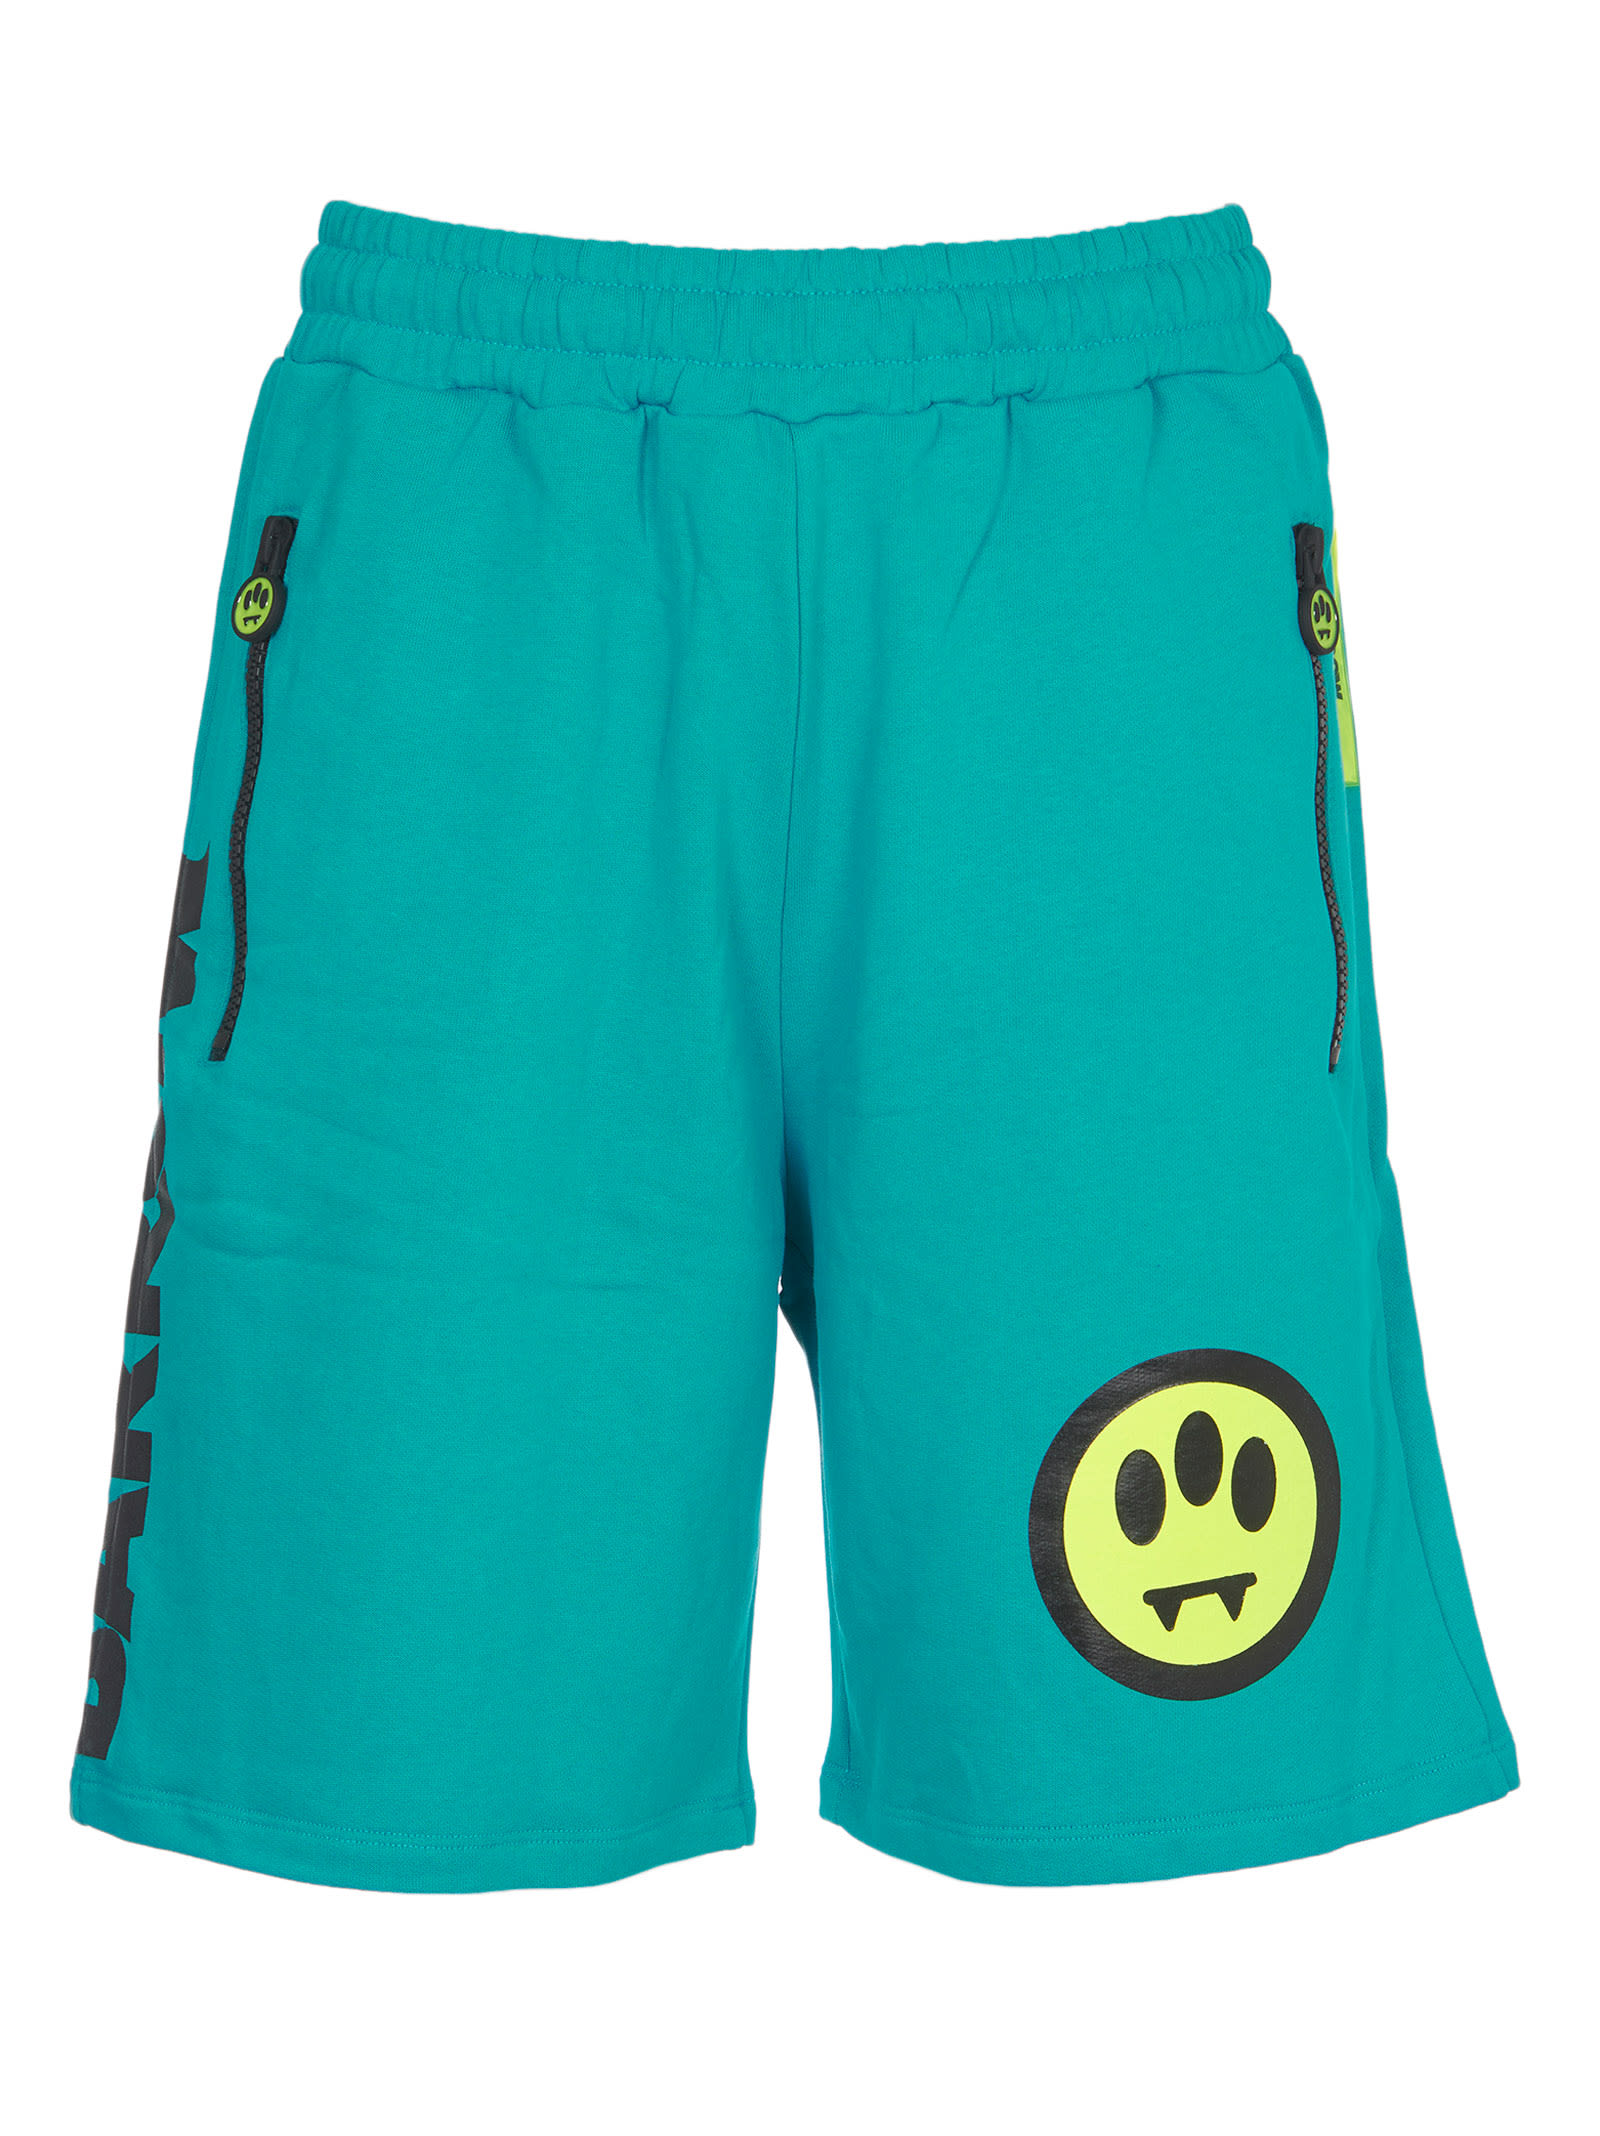 Barrow Turquoise Shorts